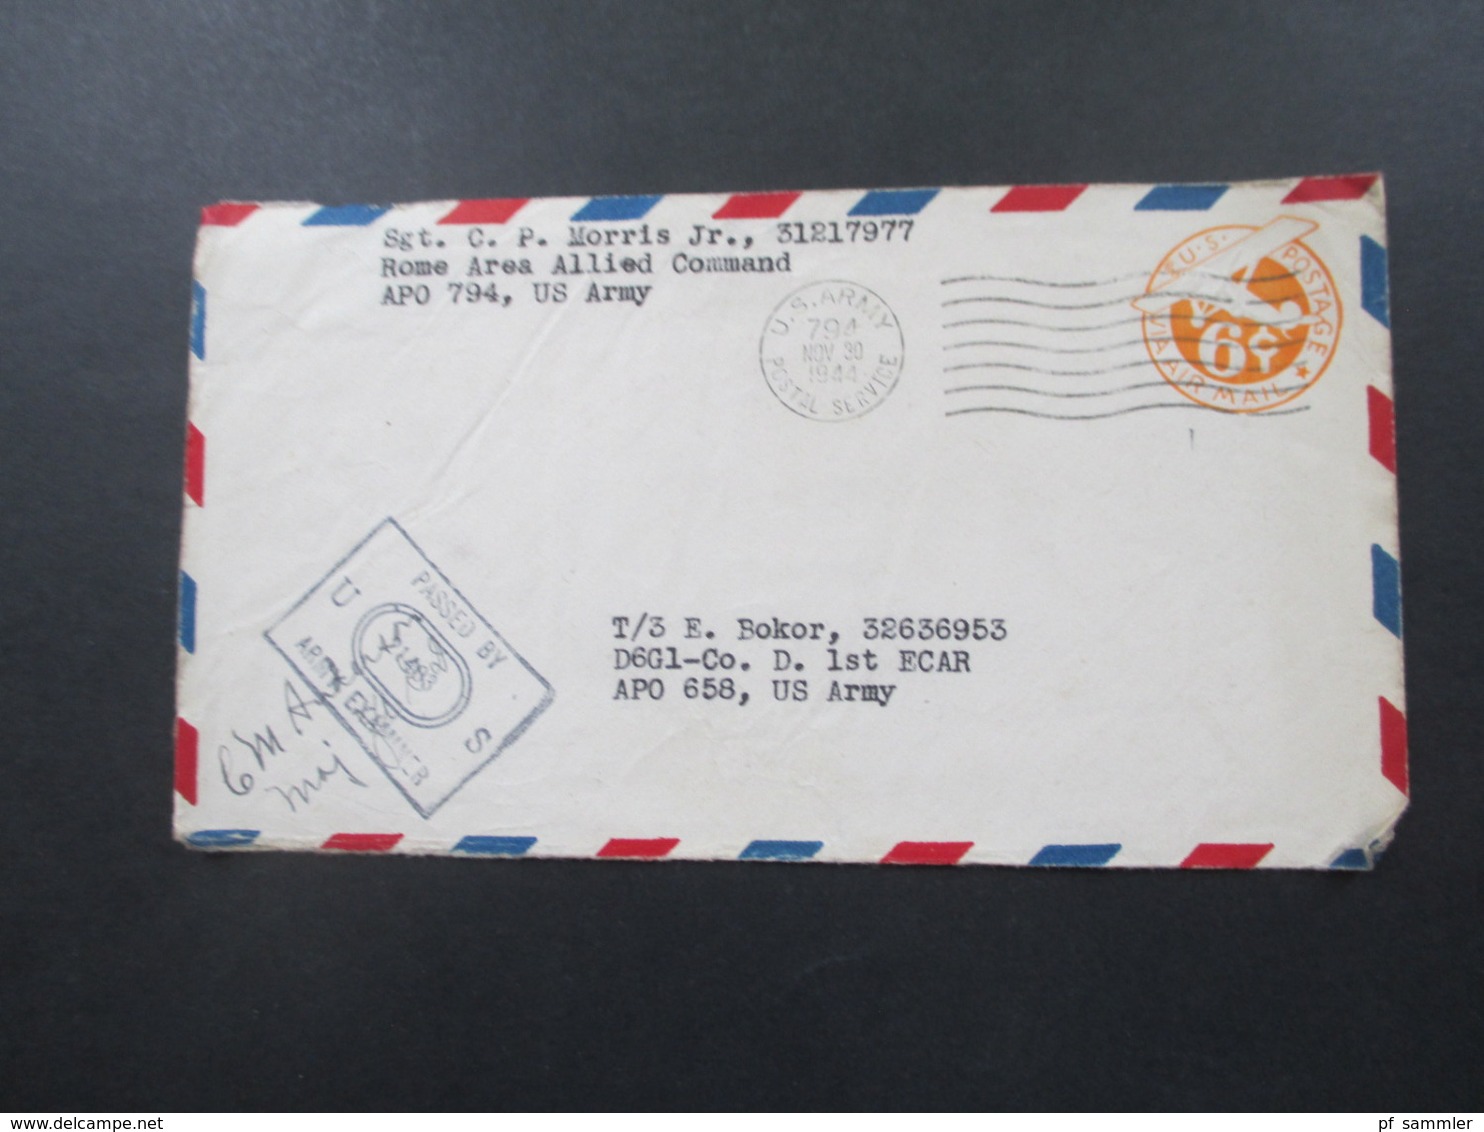 USA 1944 US Army Postal Servive Sgt. C.P. Morris Jr. 31217977 Rome Area Allied Command APO 794 US Army Army Examiner - Briefe U. Dokumente